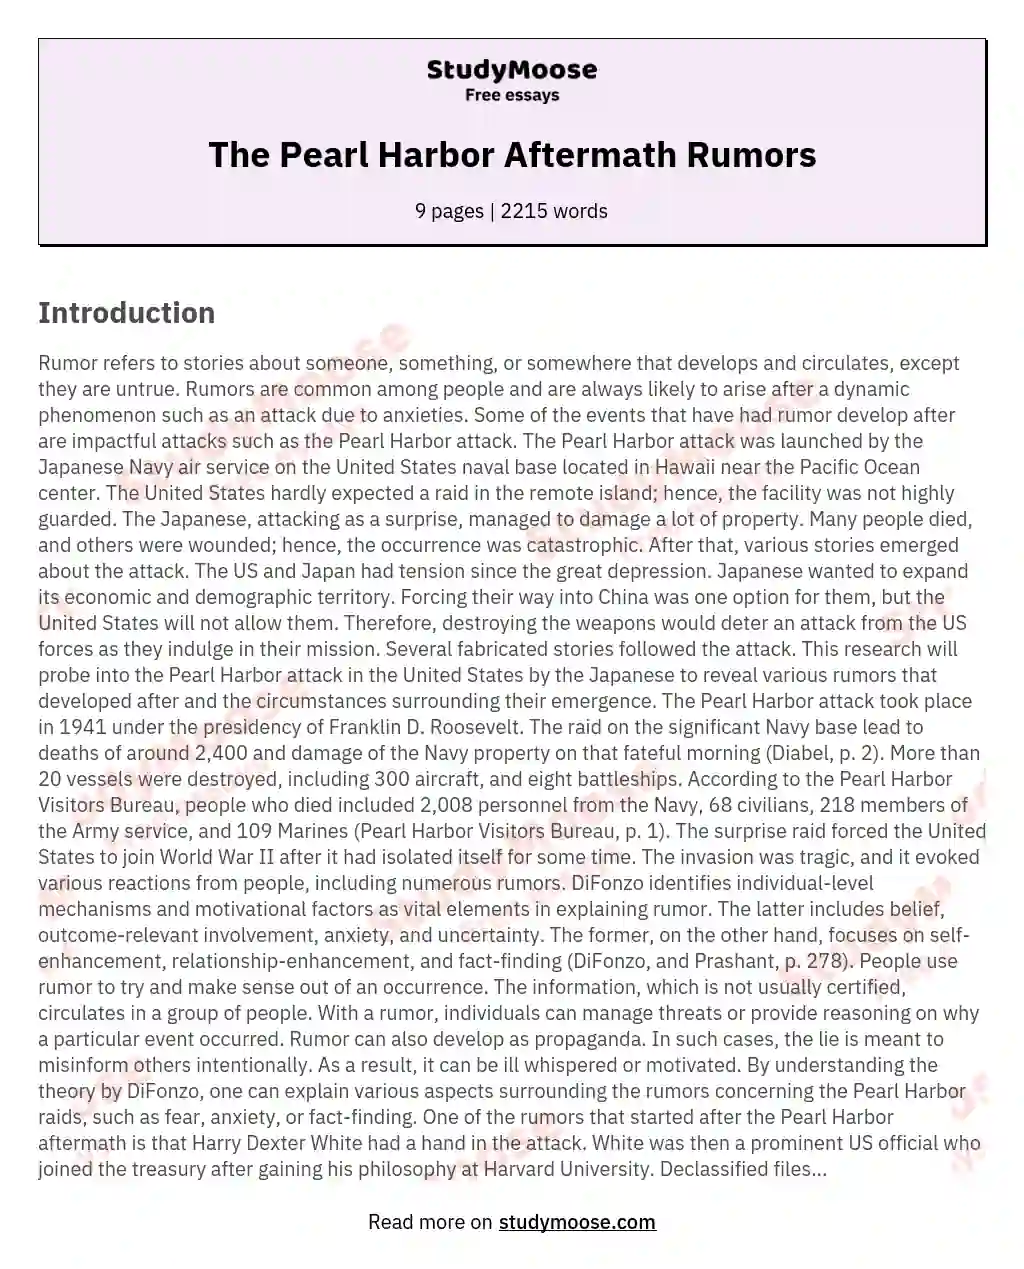 The Pearl Harbor Aftermath Rumors essay